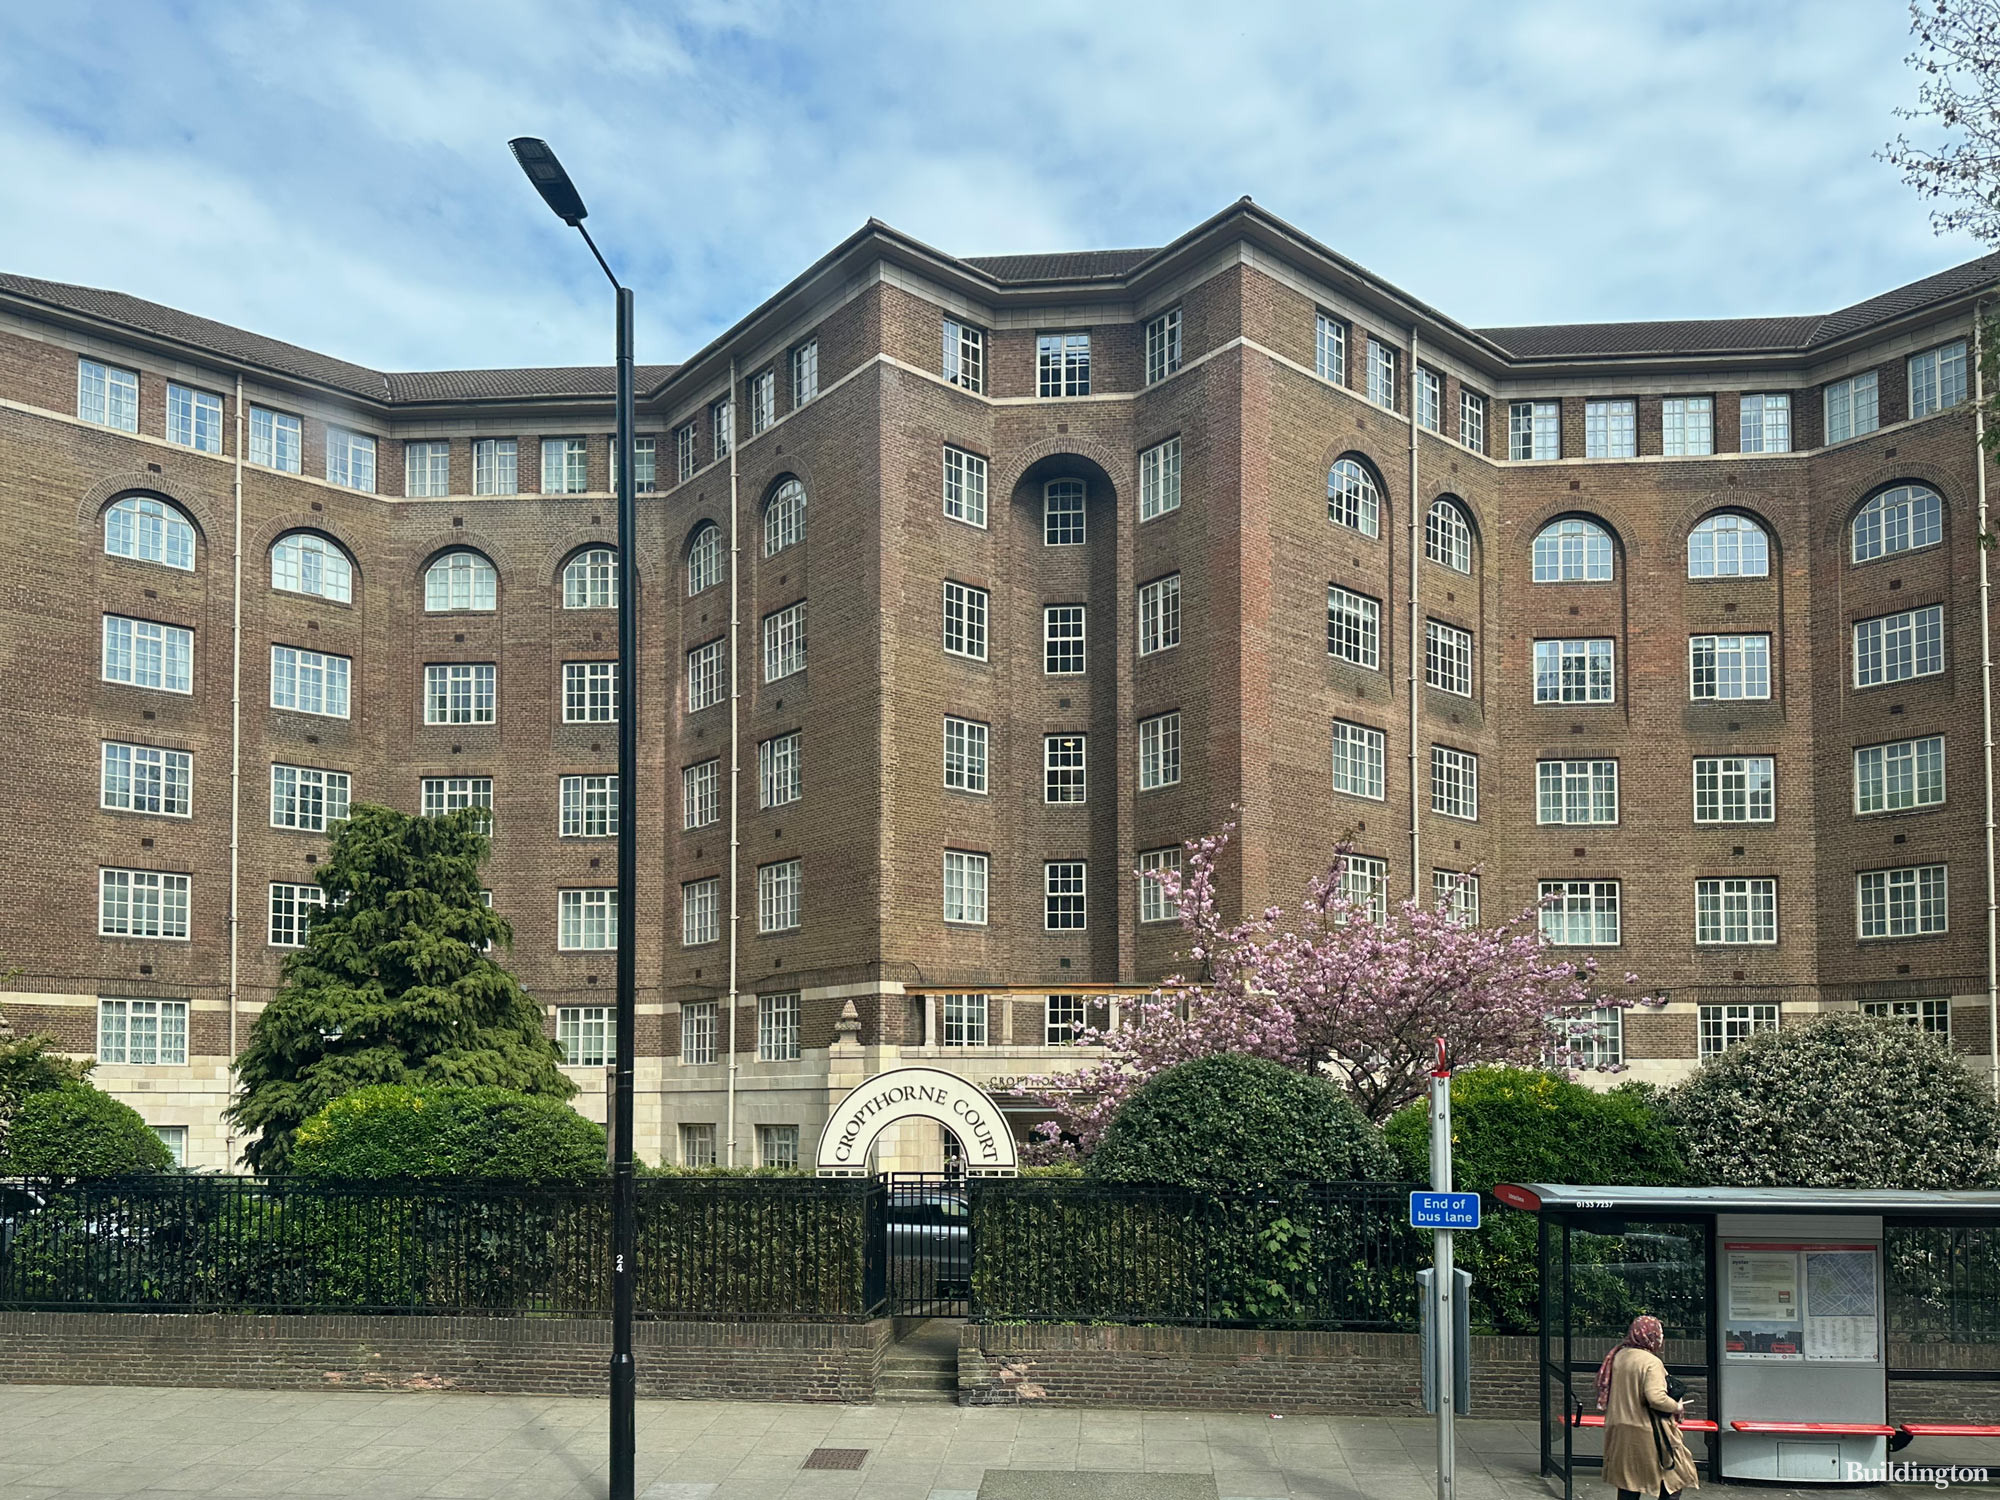 Cropthorne Court apartments in Maida Vale, London W9